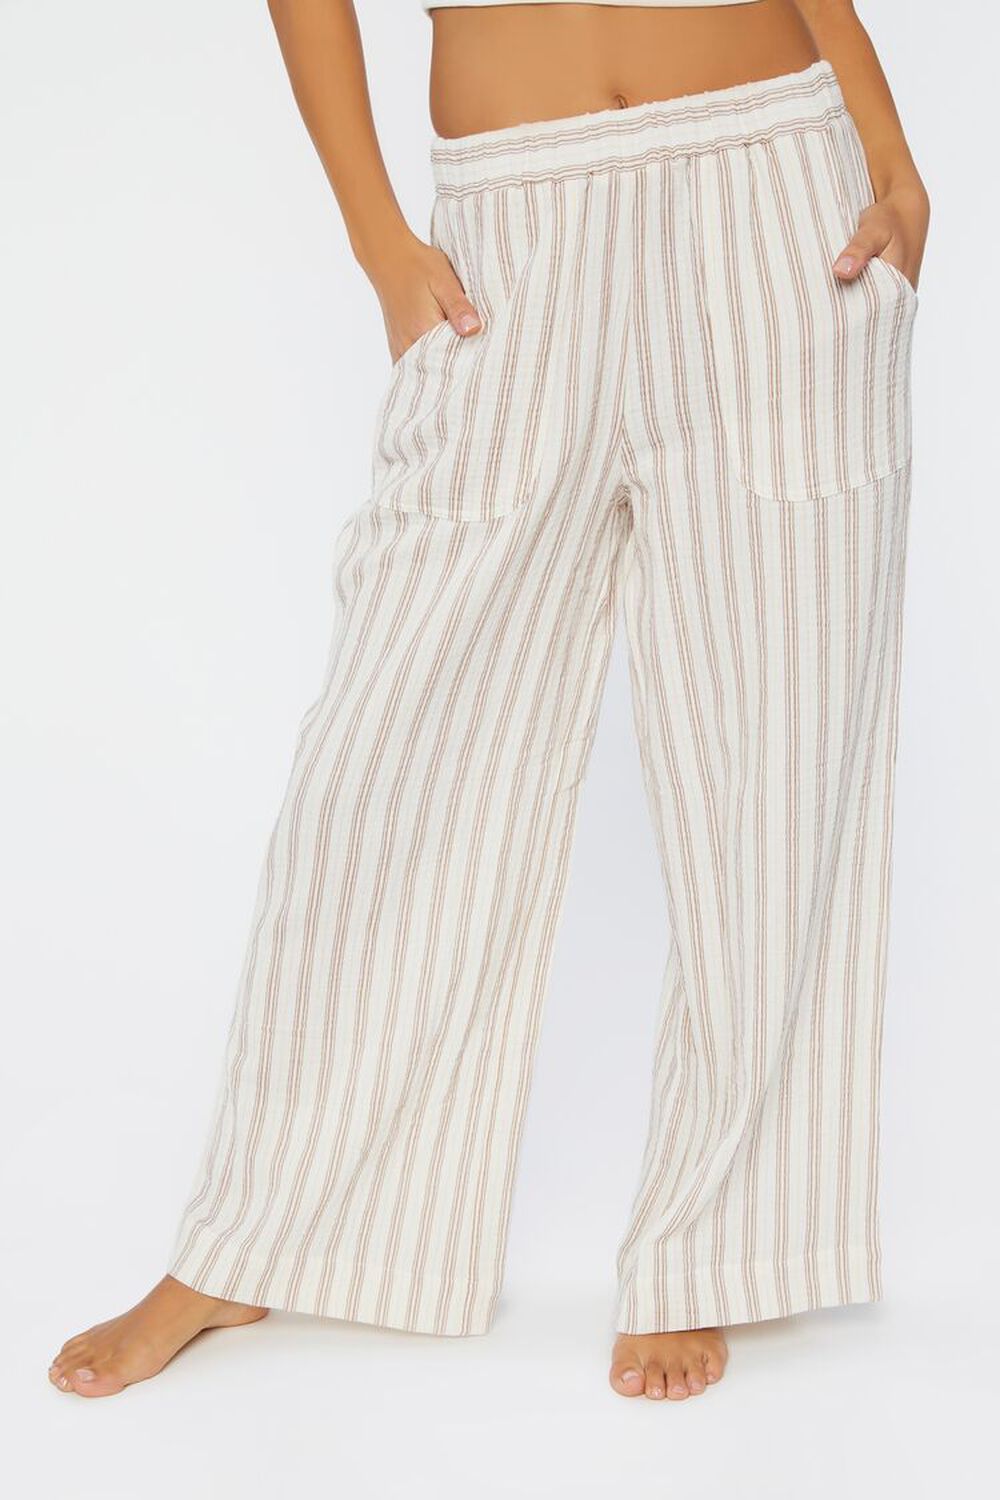 WHITE/MULTI Striped High-Rise Pajama Pants, image 2